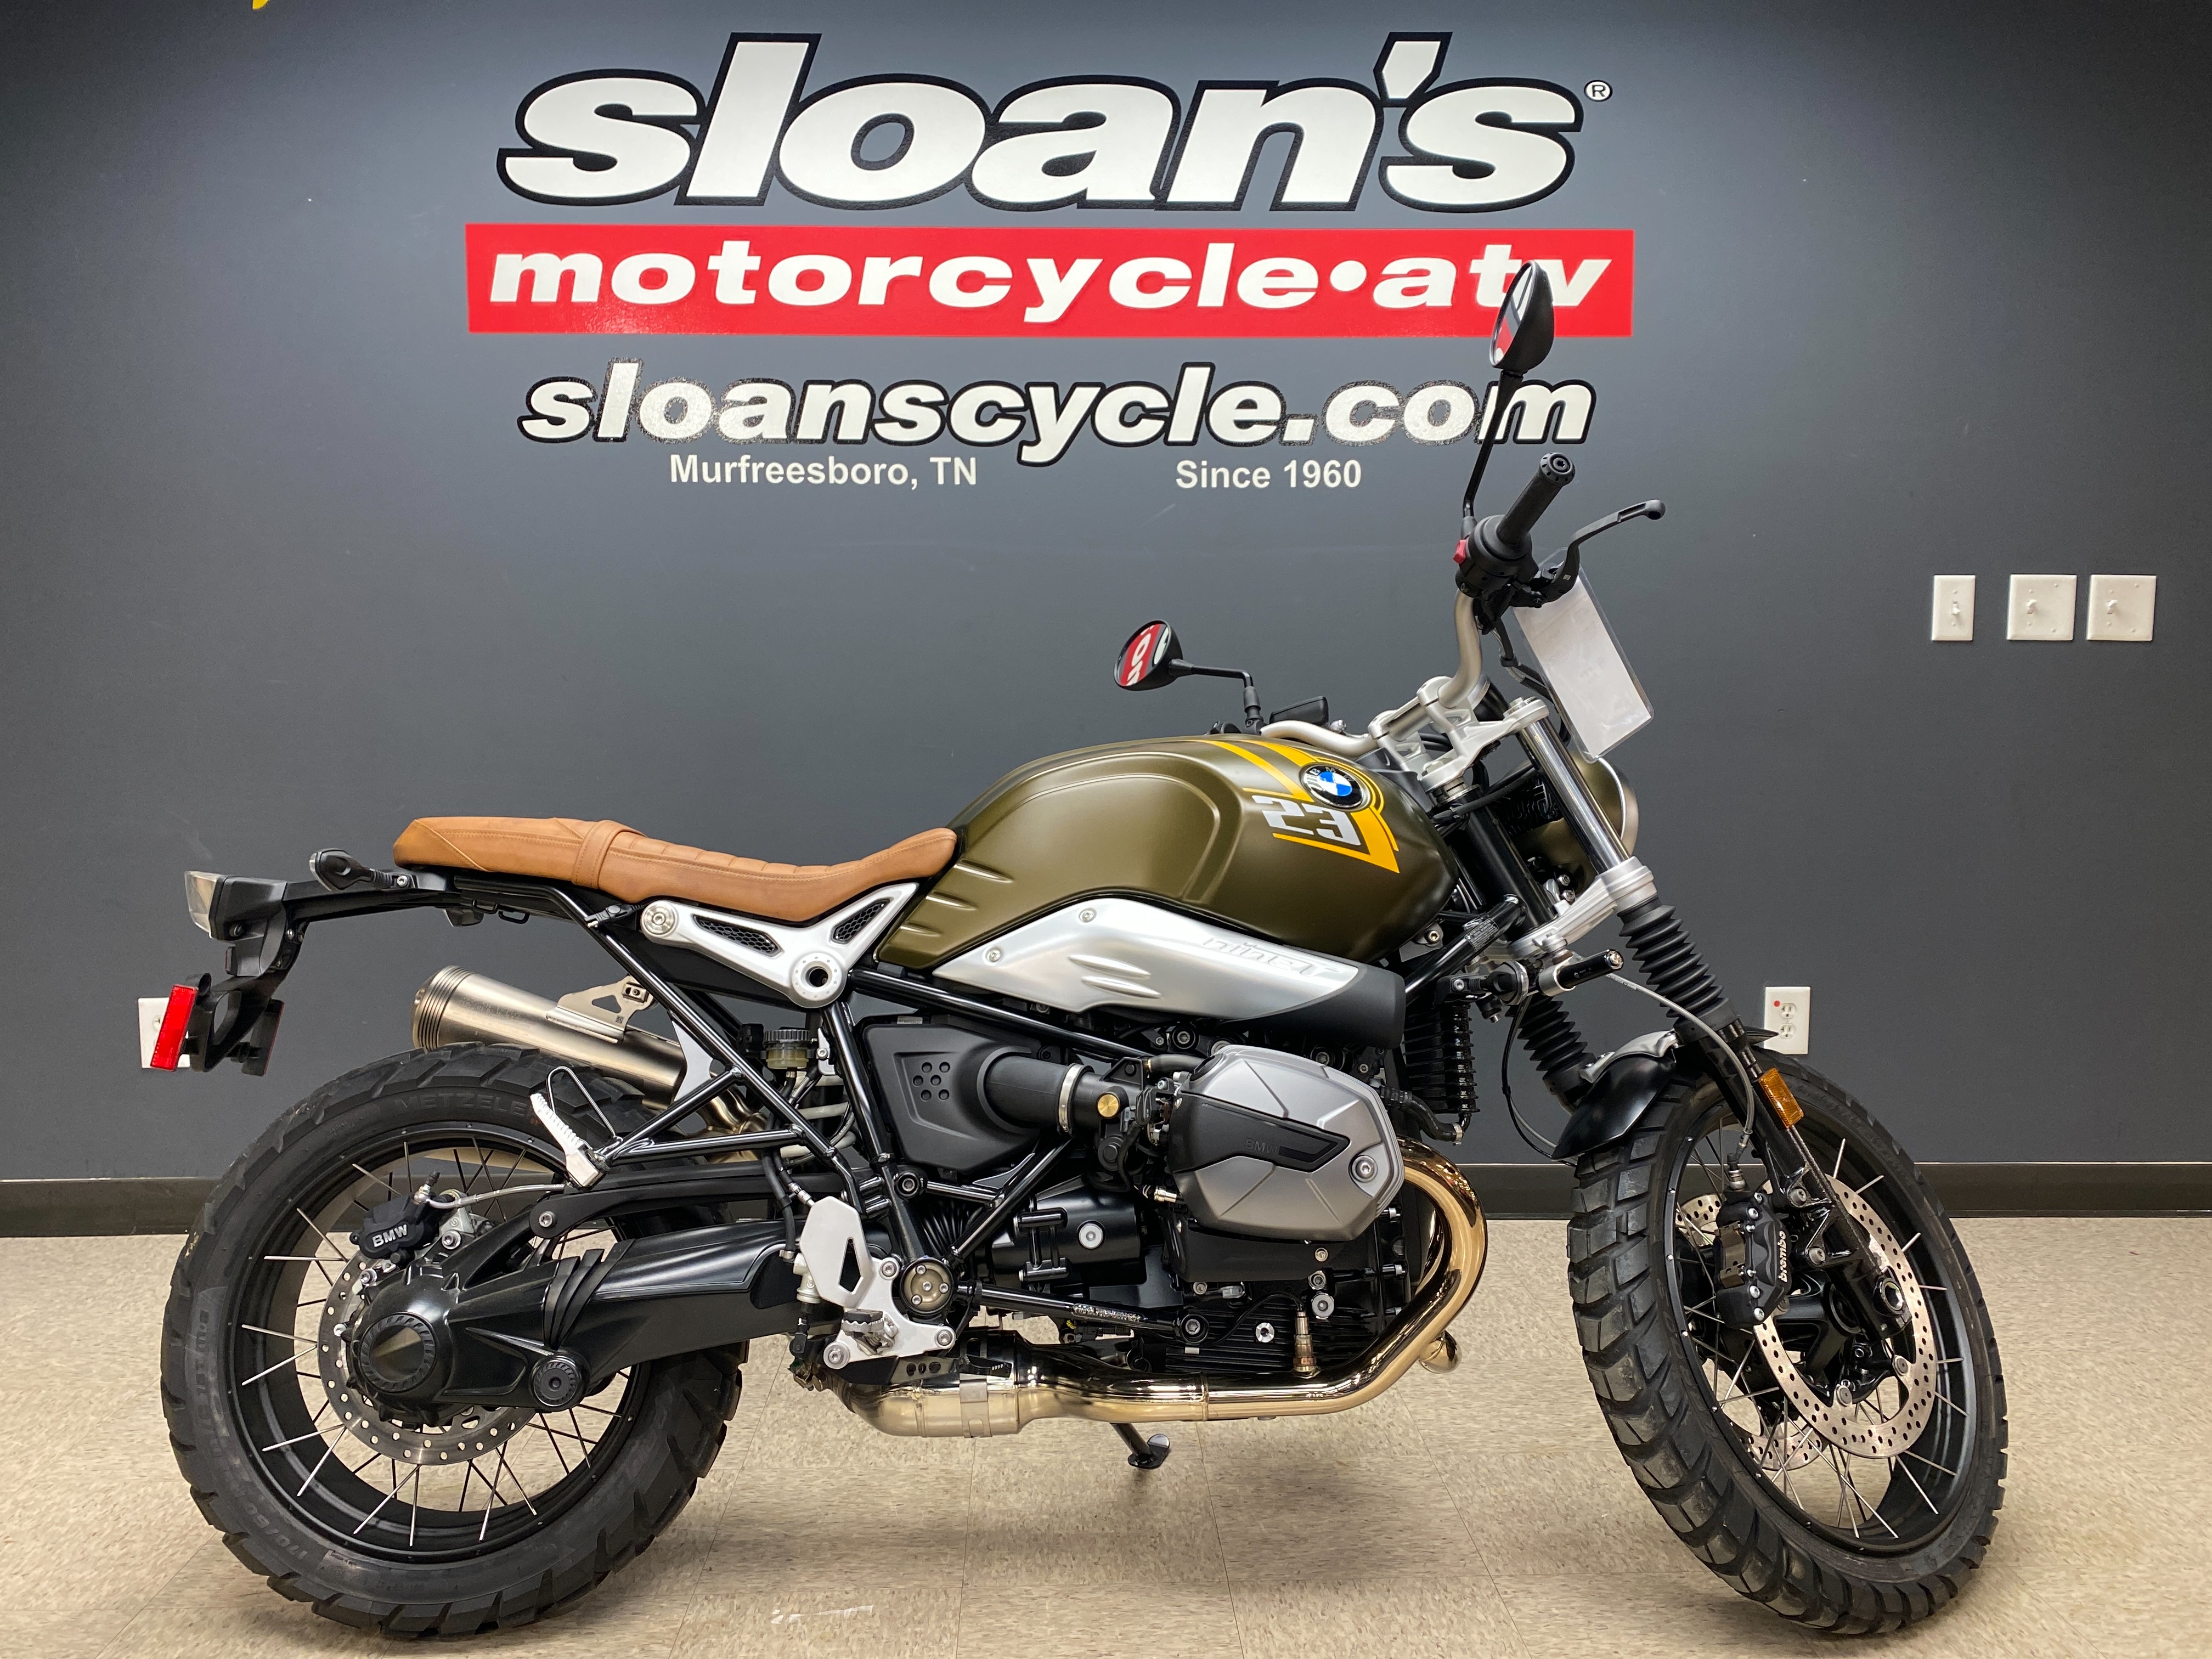 2021 BMW R nineT Scrambler at Sloans Motorcycle ATV, Murfreesboro, TN, 37129